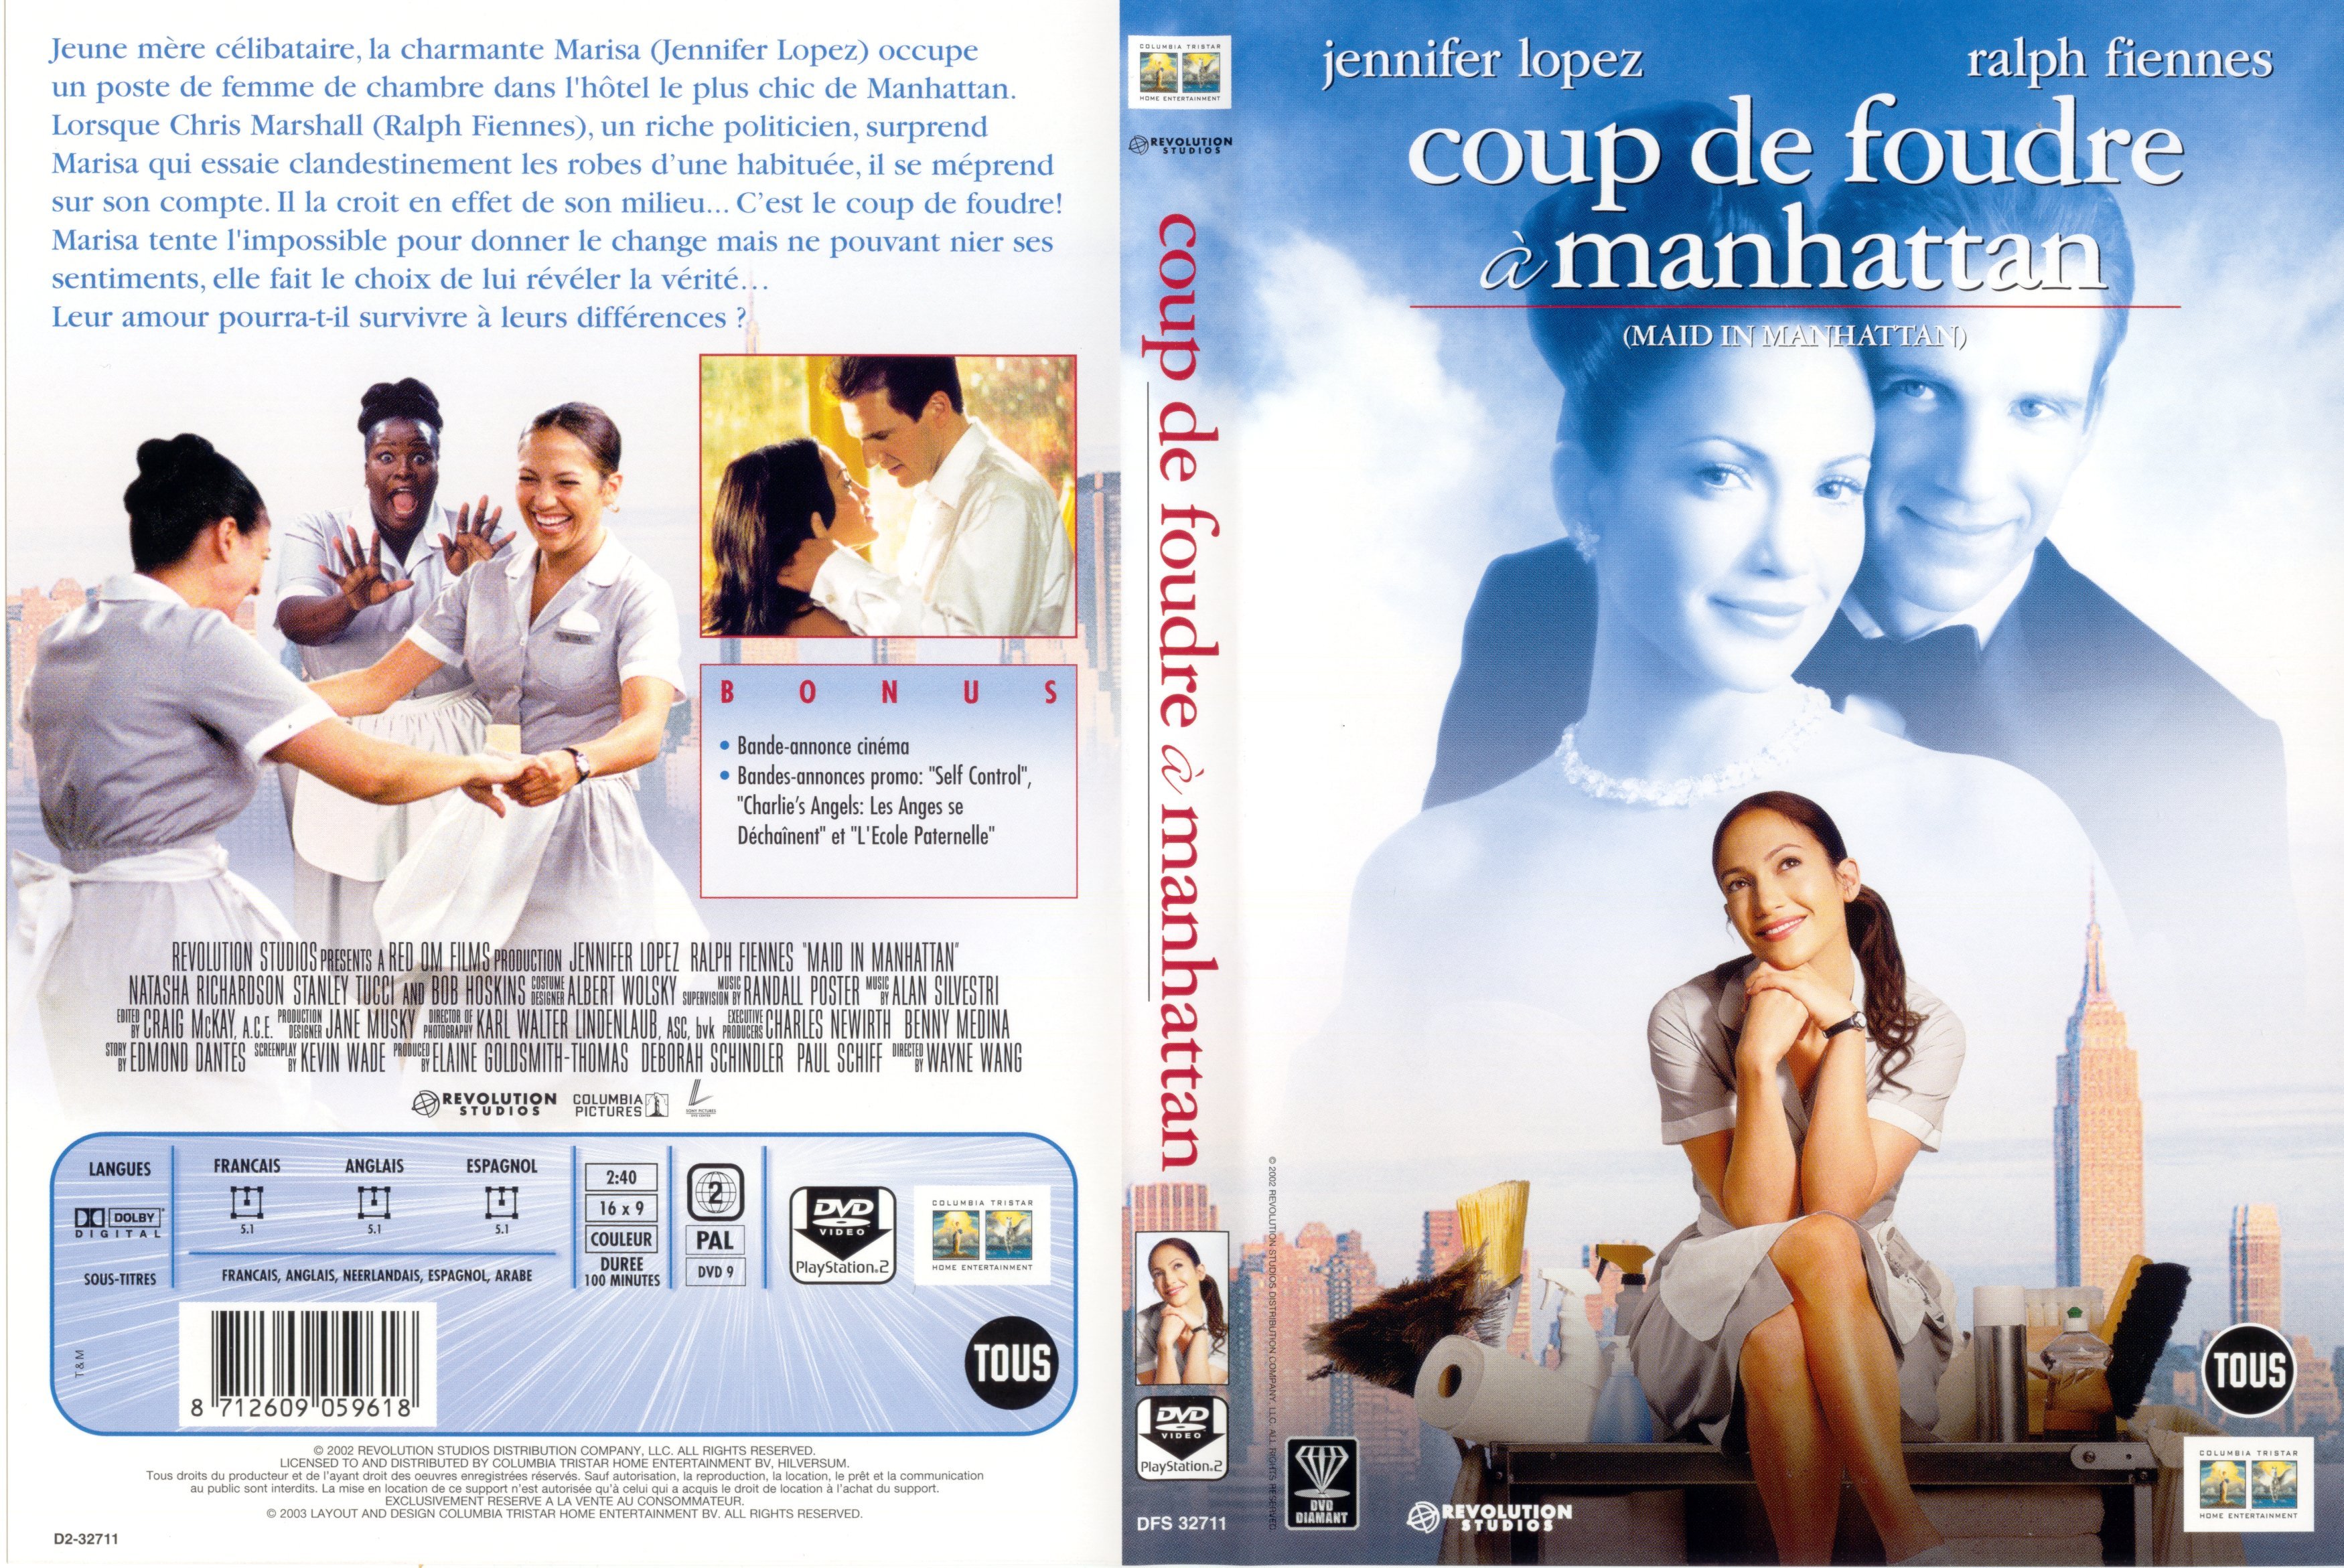 Jaquette DVD Coup de foudre  Manhattan v2